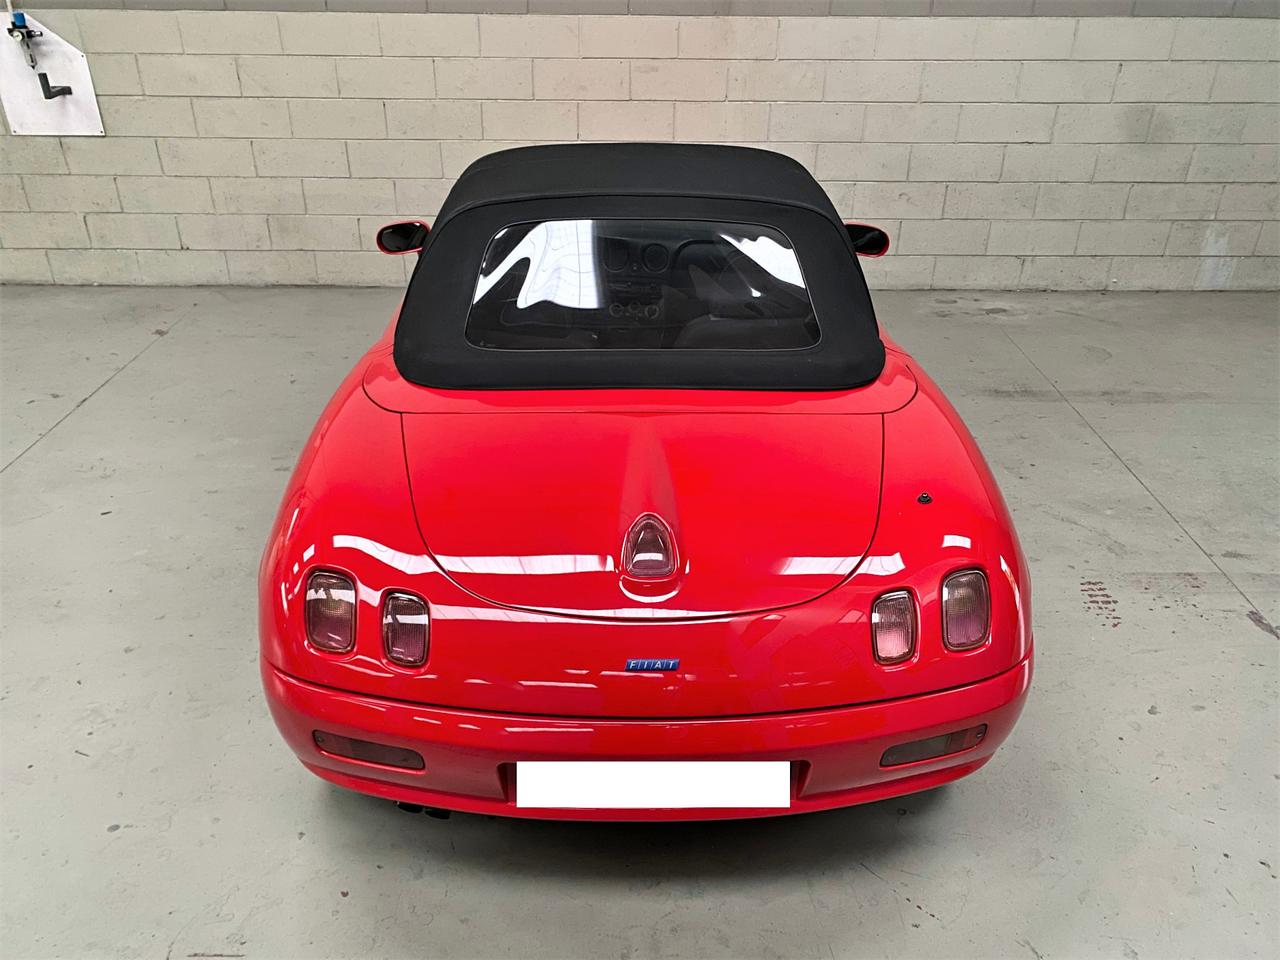 Fiat Barchetta 1.8 16V - anno 1998